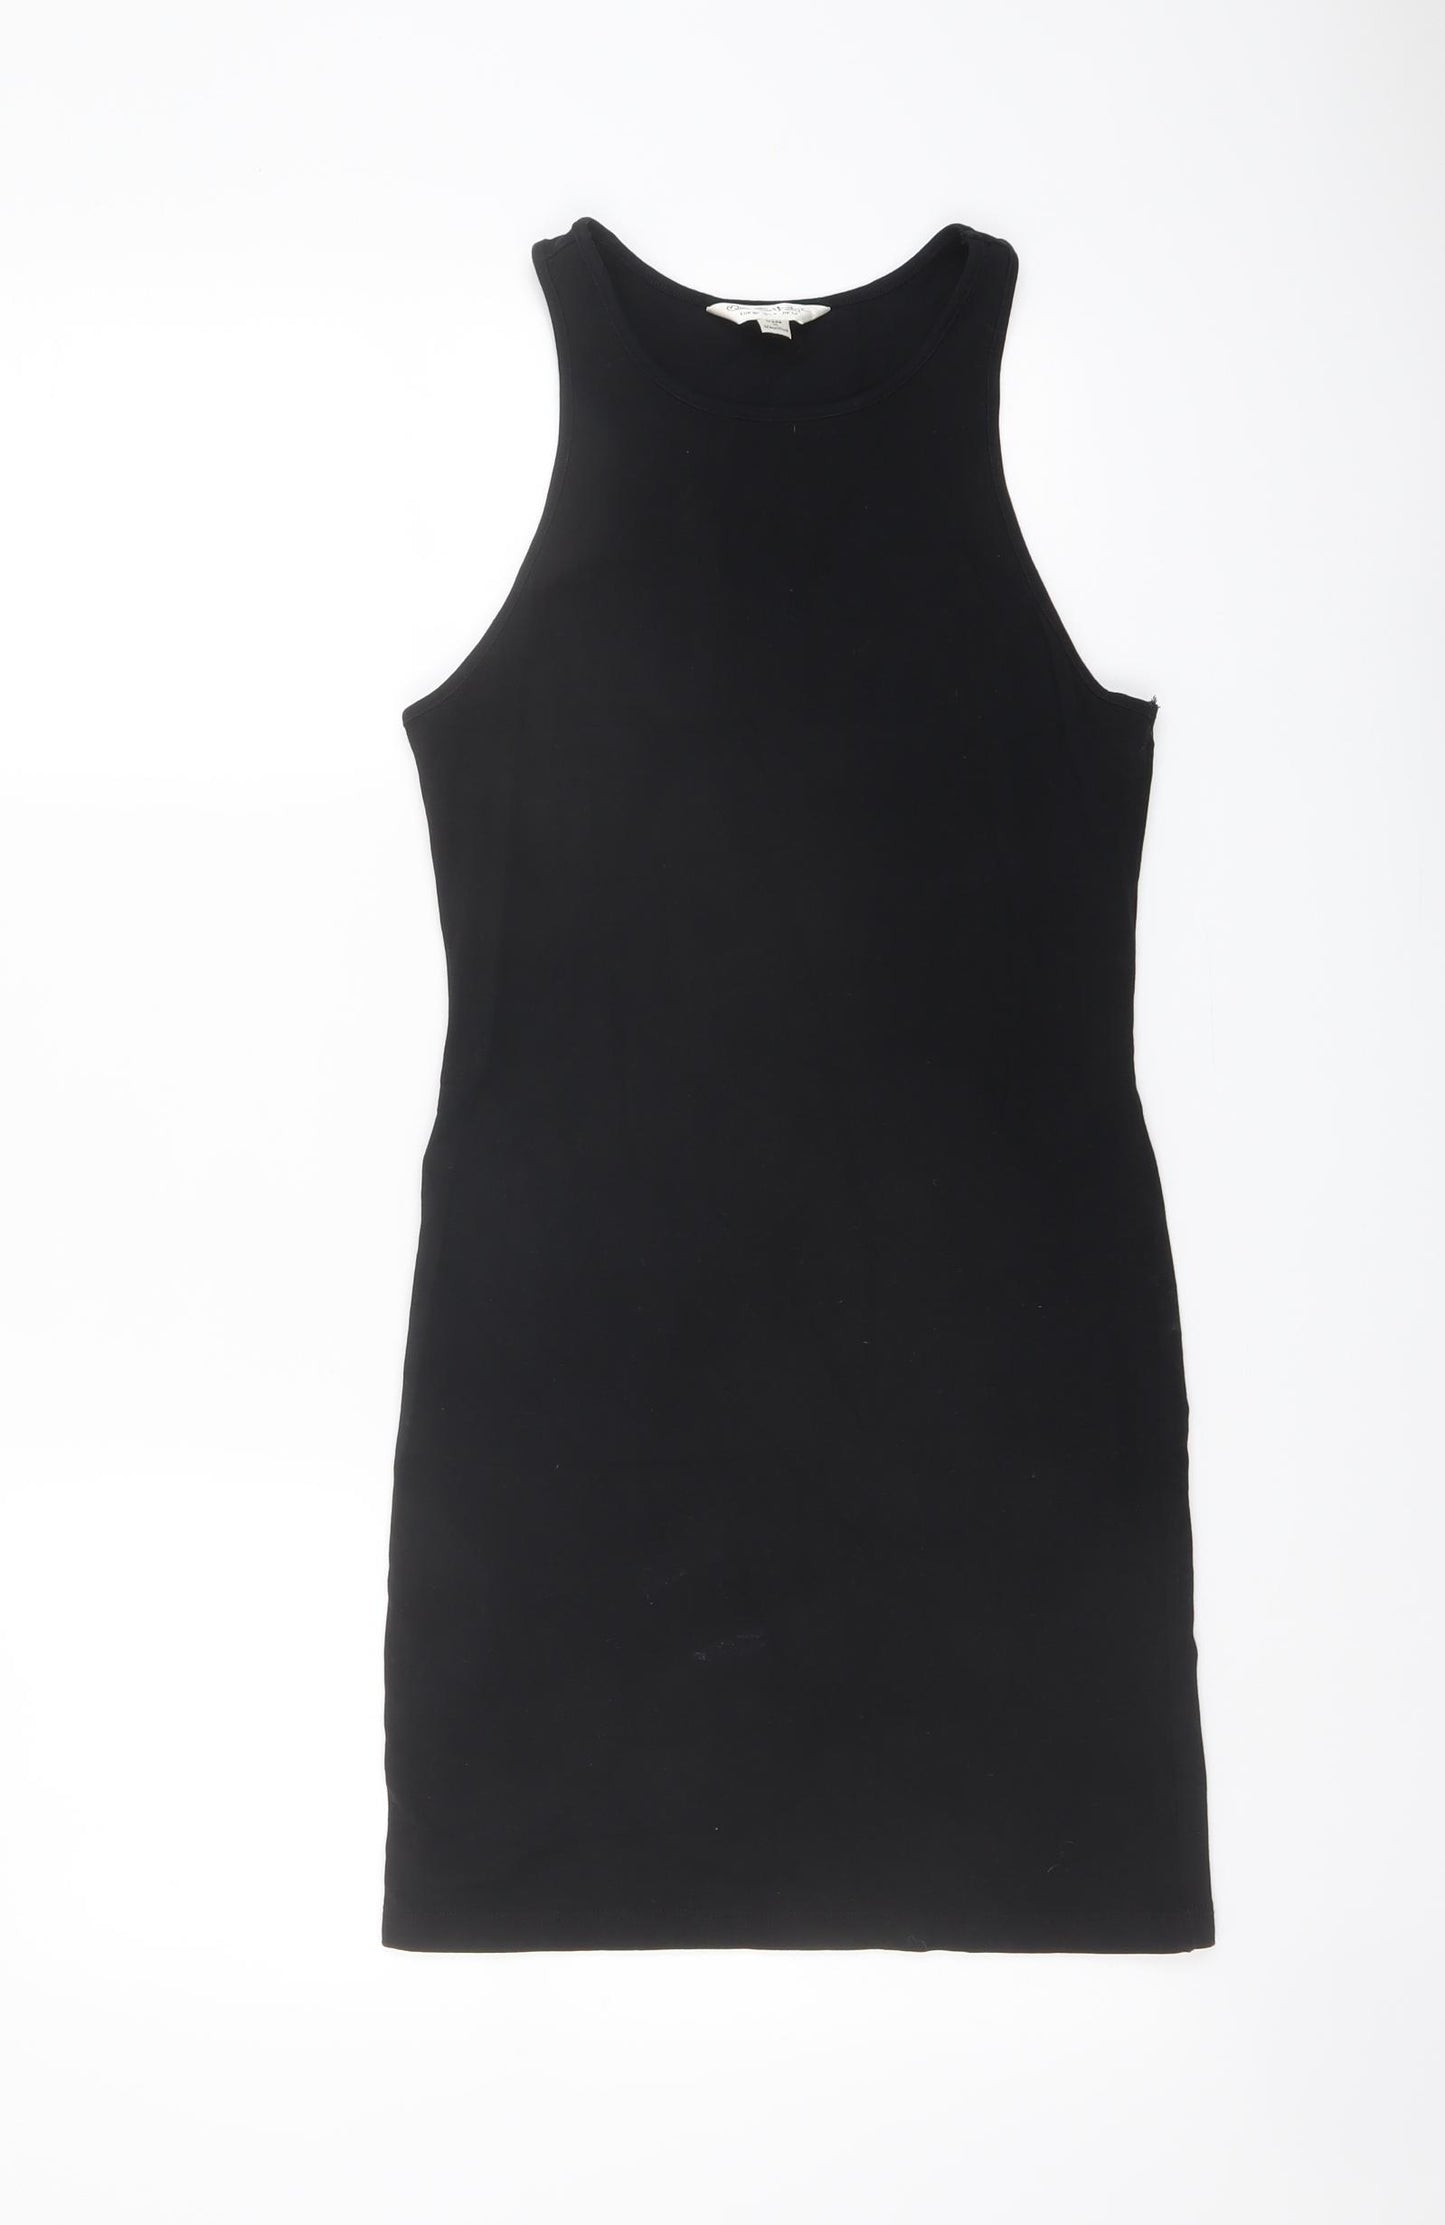 Miss Selfridge Womens Black Polyester Tank Dress Size 12 Round Neck Pullover